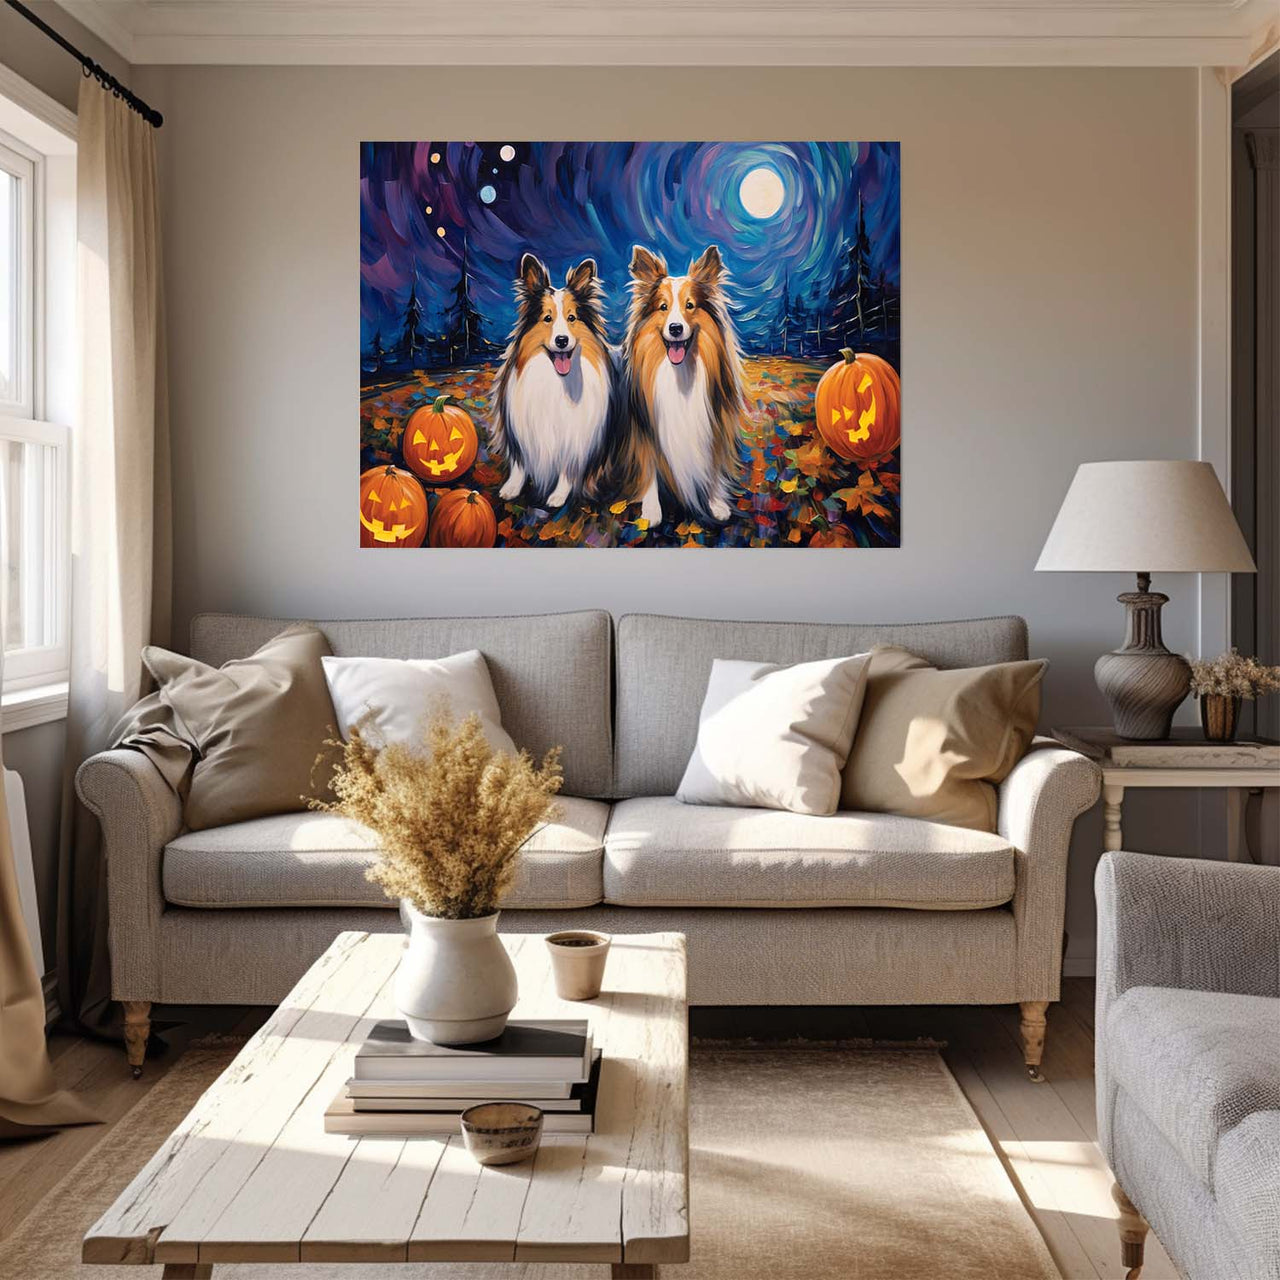 Shetland Sheepdogs Dog 02 Halloween With Pumpkin Oil Painting Van Goh Style, Wooden Canvas Prints Wall Art Painting , Canvas 3d Art